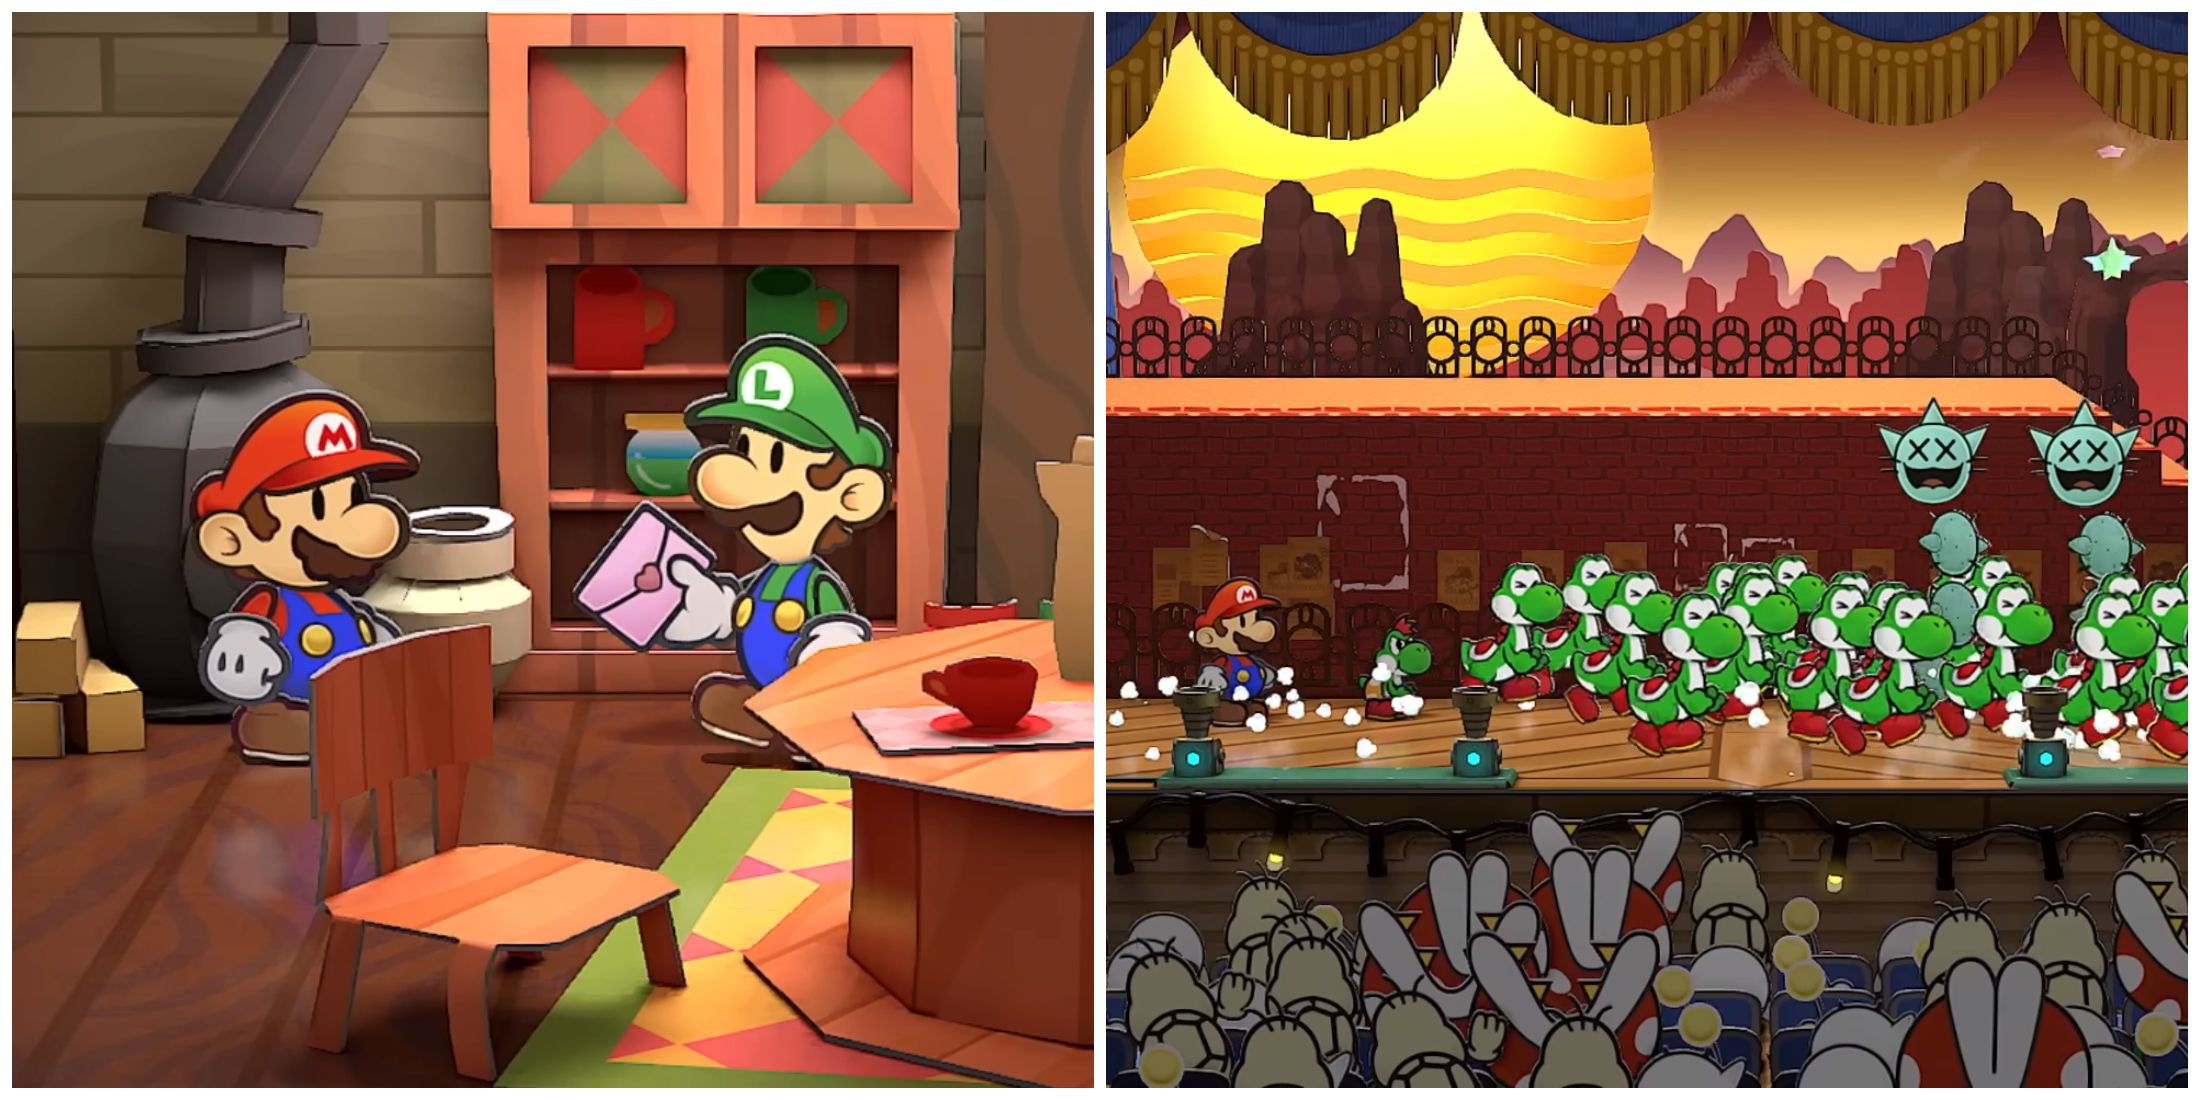 Split image of Mario and Luigi and Mario in battle in Paper Mario: The Thousand-Year Door